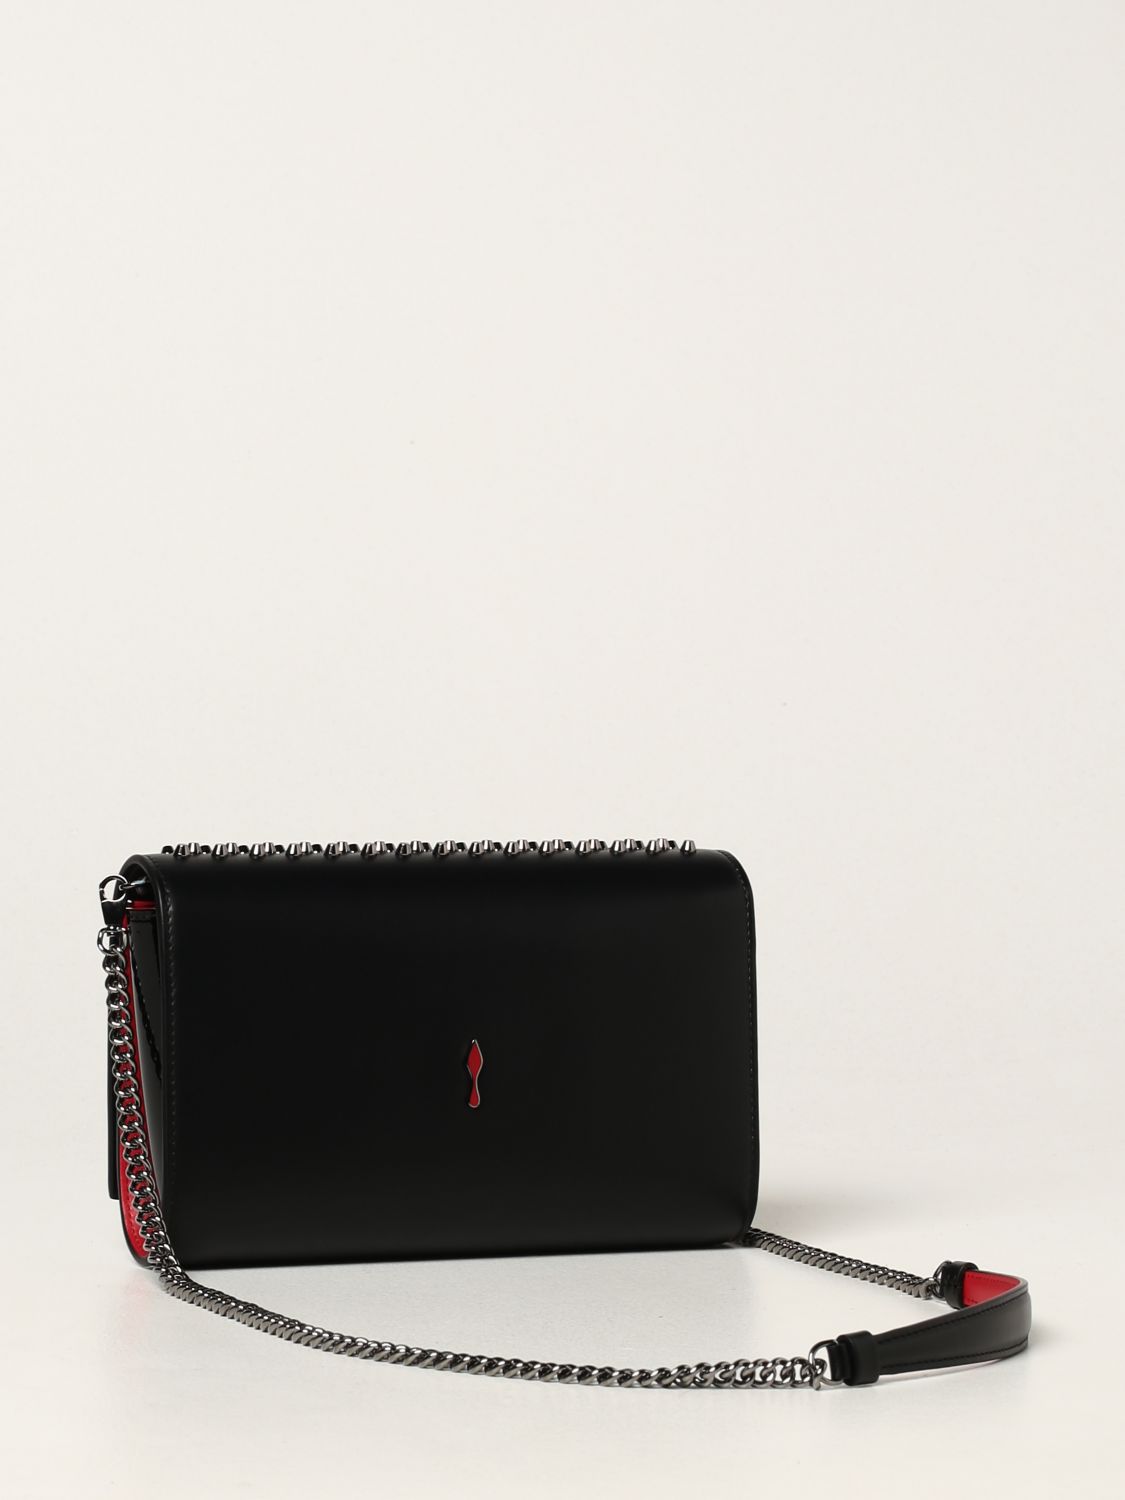 Paloma leather handbag Christian Louboutin Black in Leather - 35216518